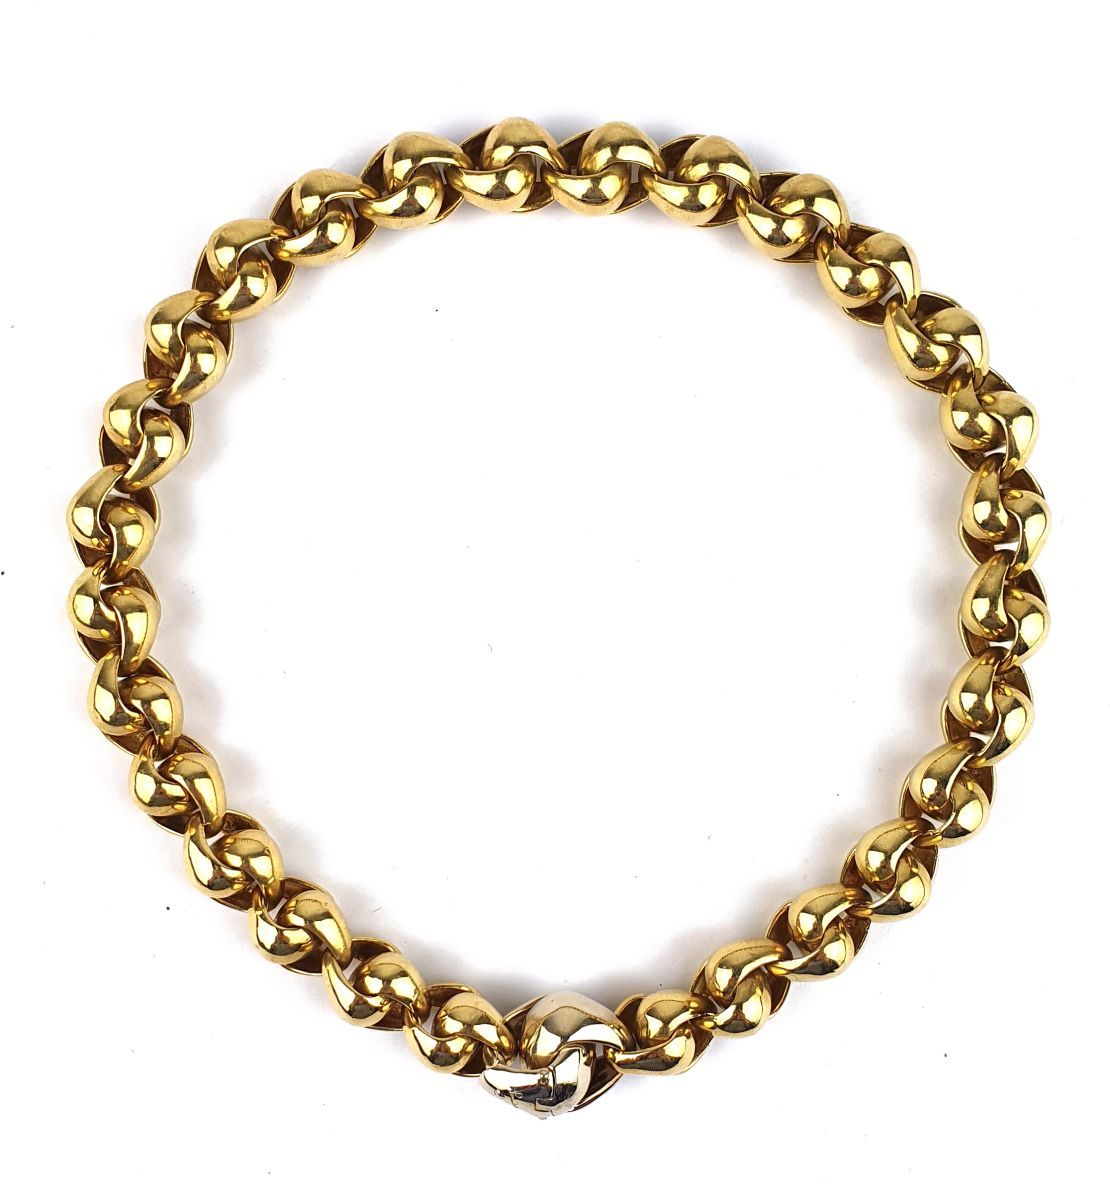 POMELLATO An 18k yellow gold necklace by Pomellato.